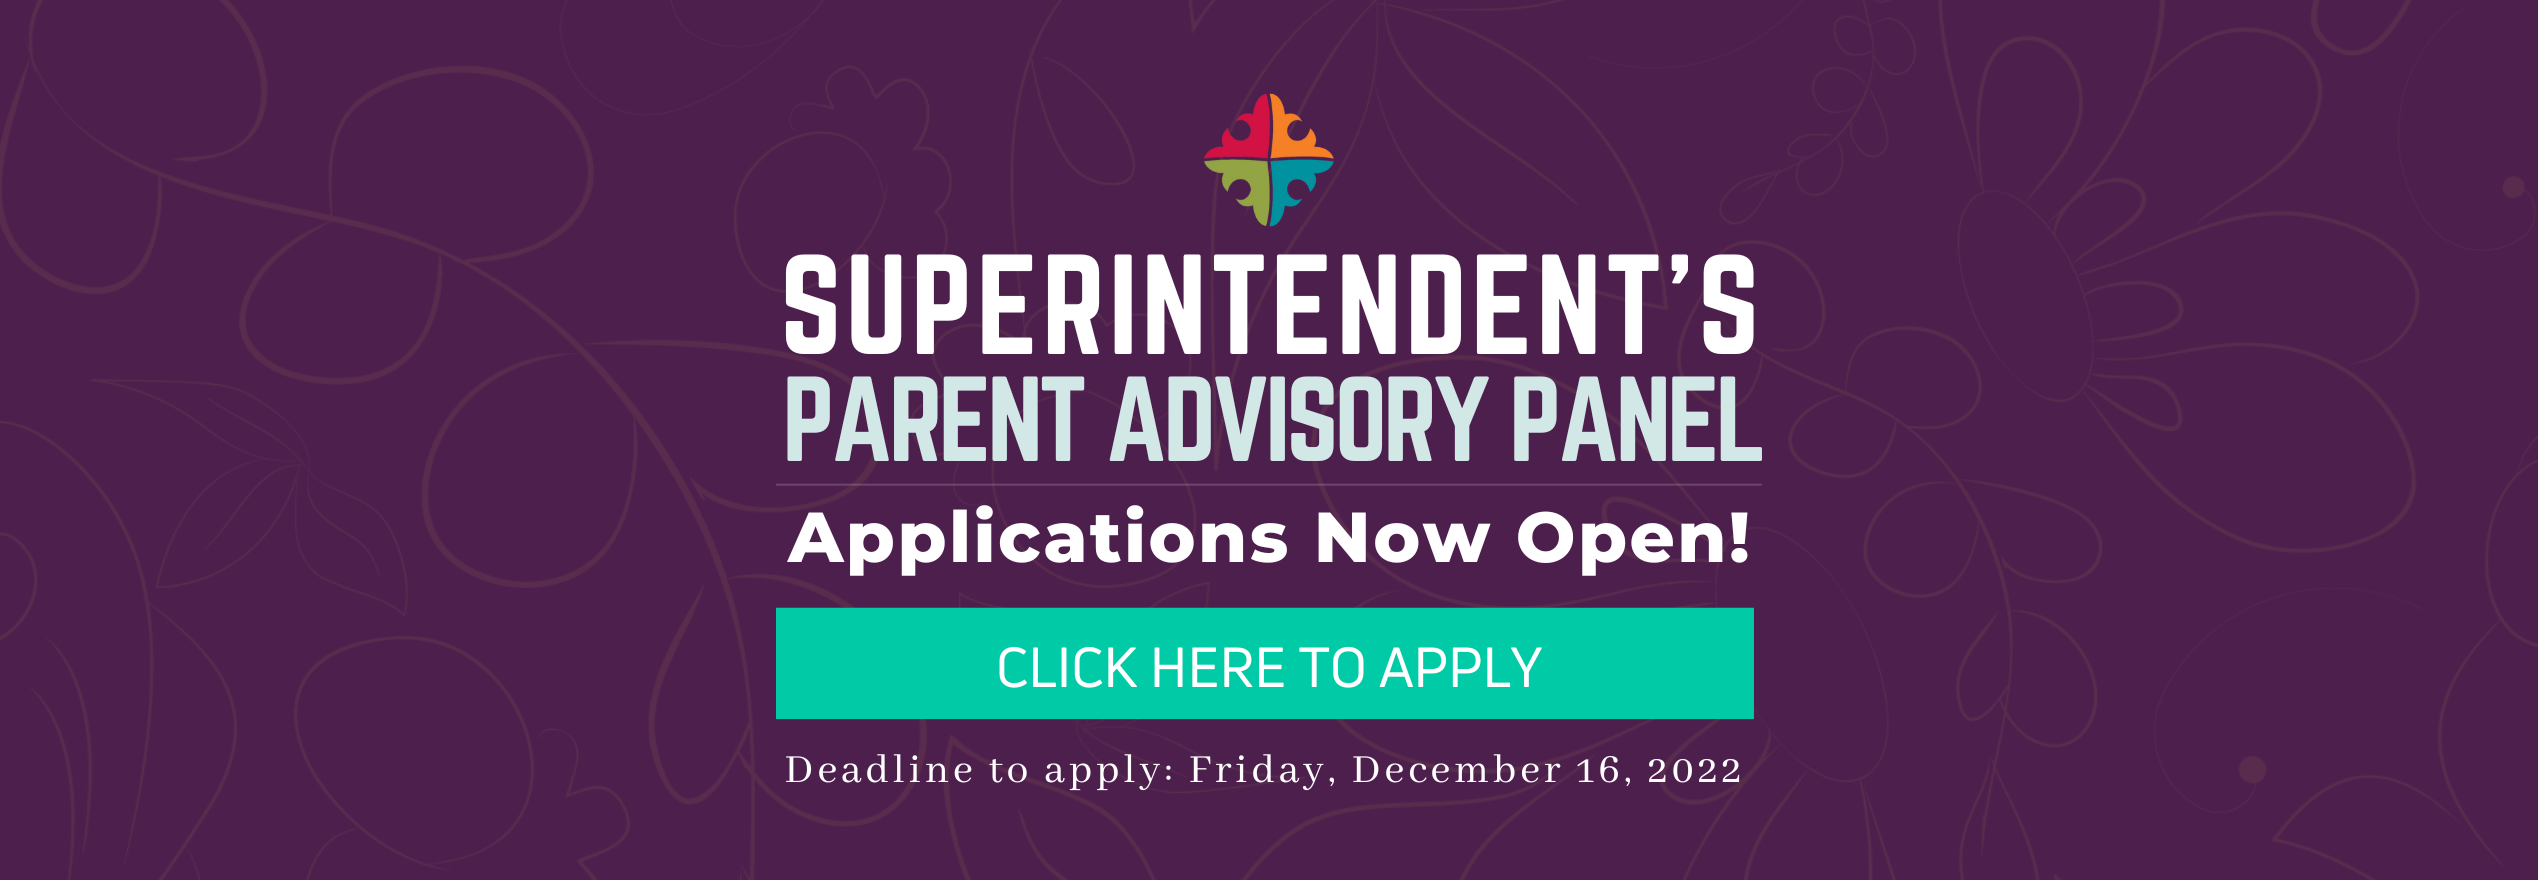 Superintendent's Parent Advisory Panel